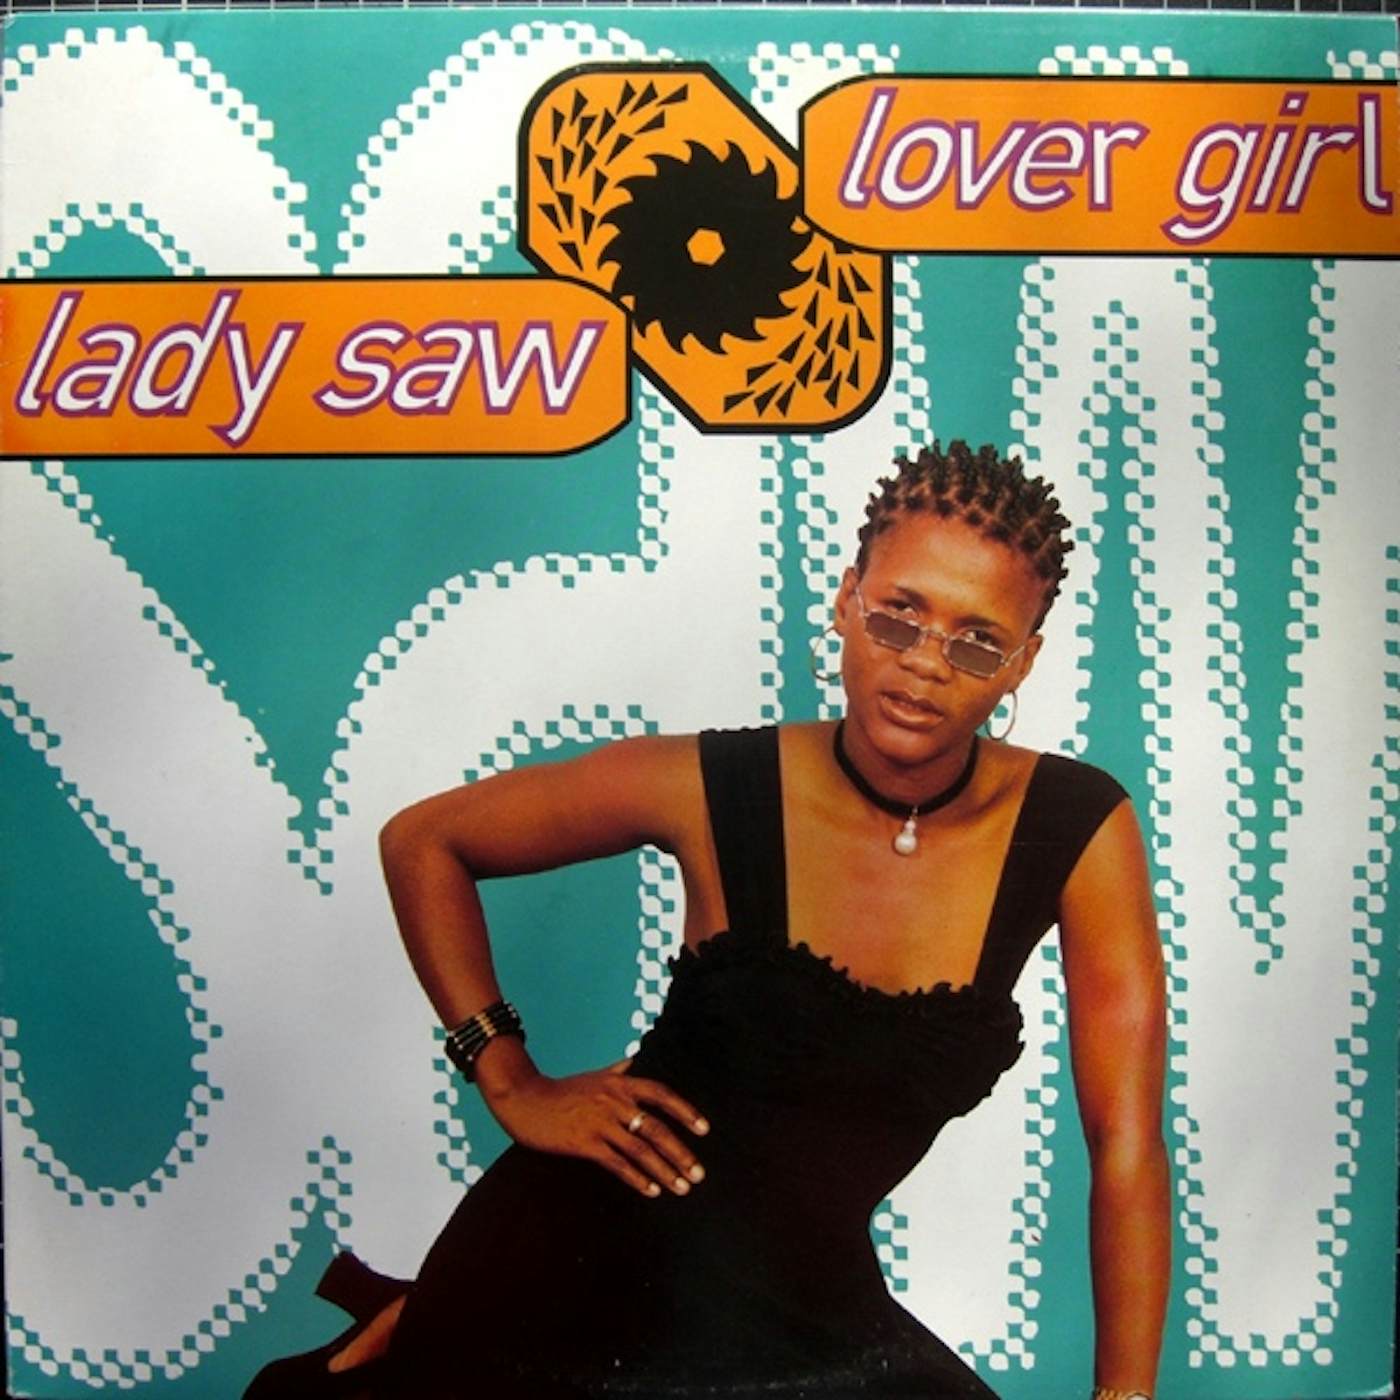 Lady Saw Lover Girl Vinyl Record